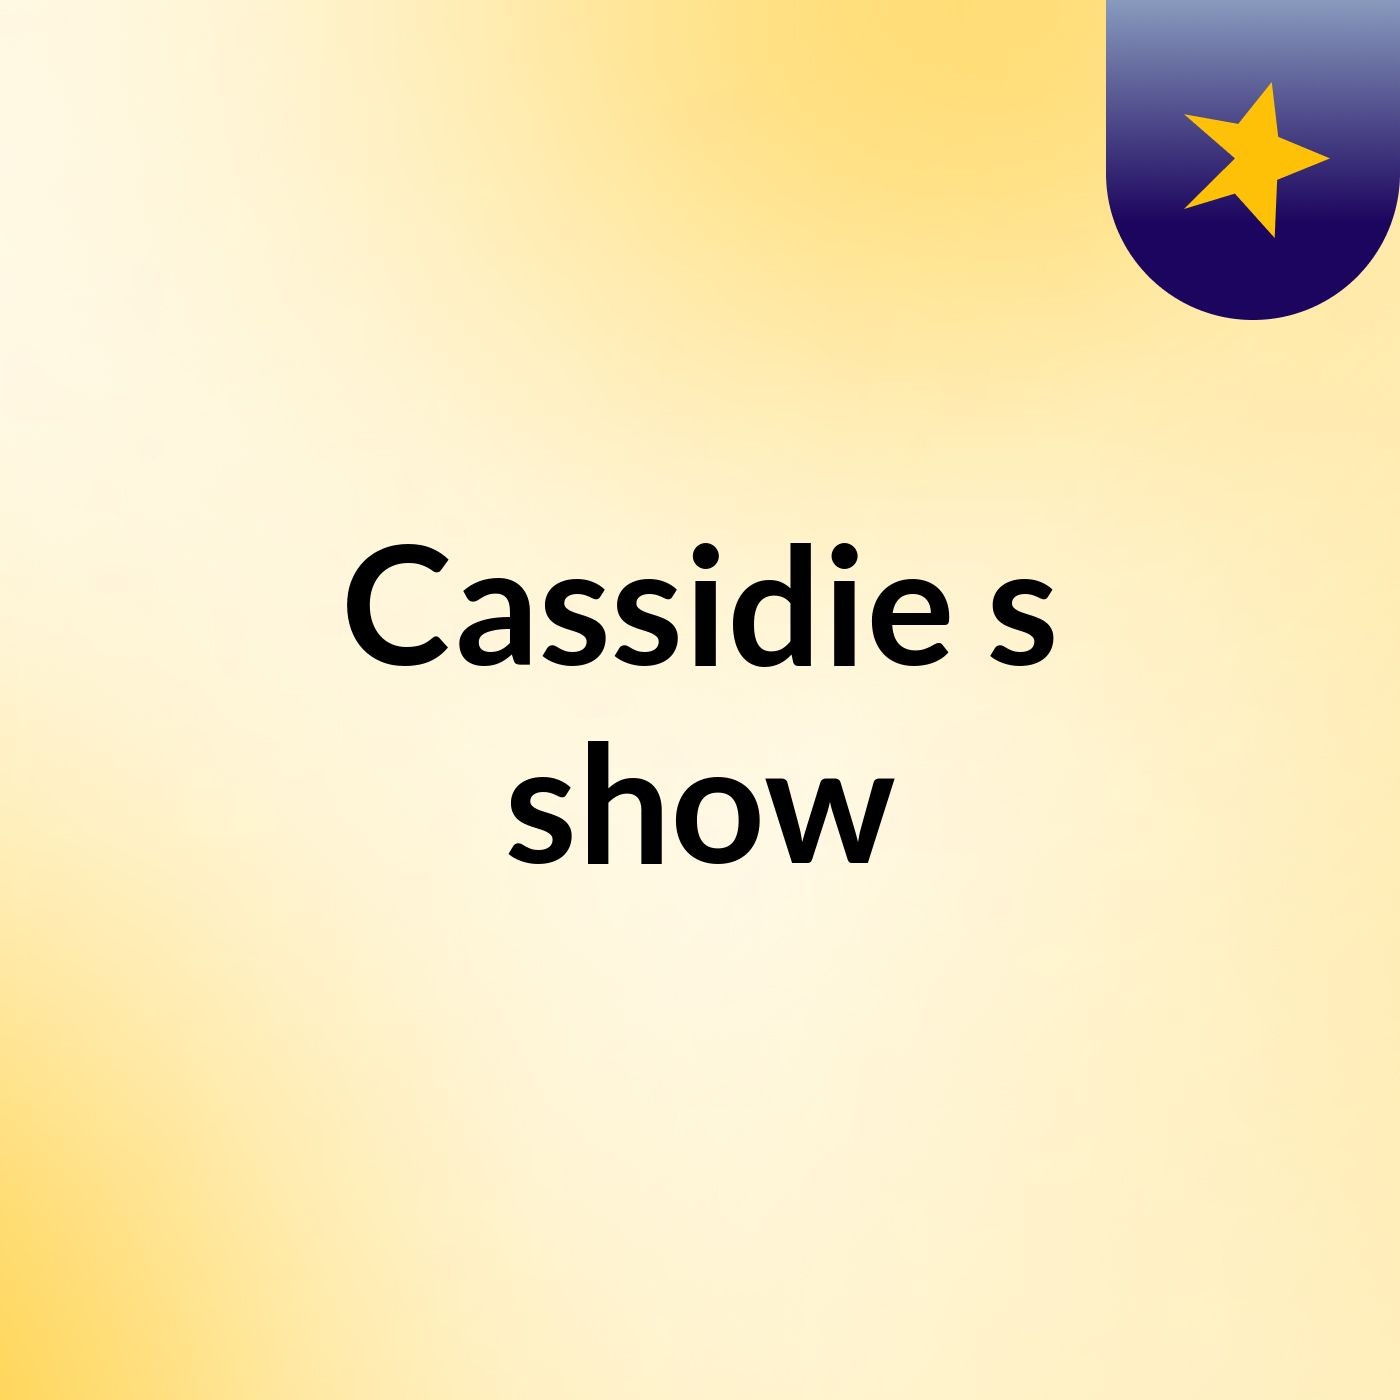 Cassidie's show